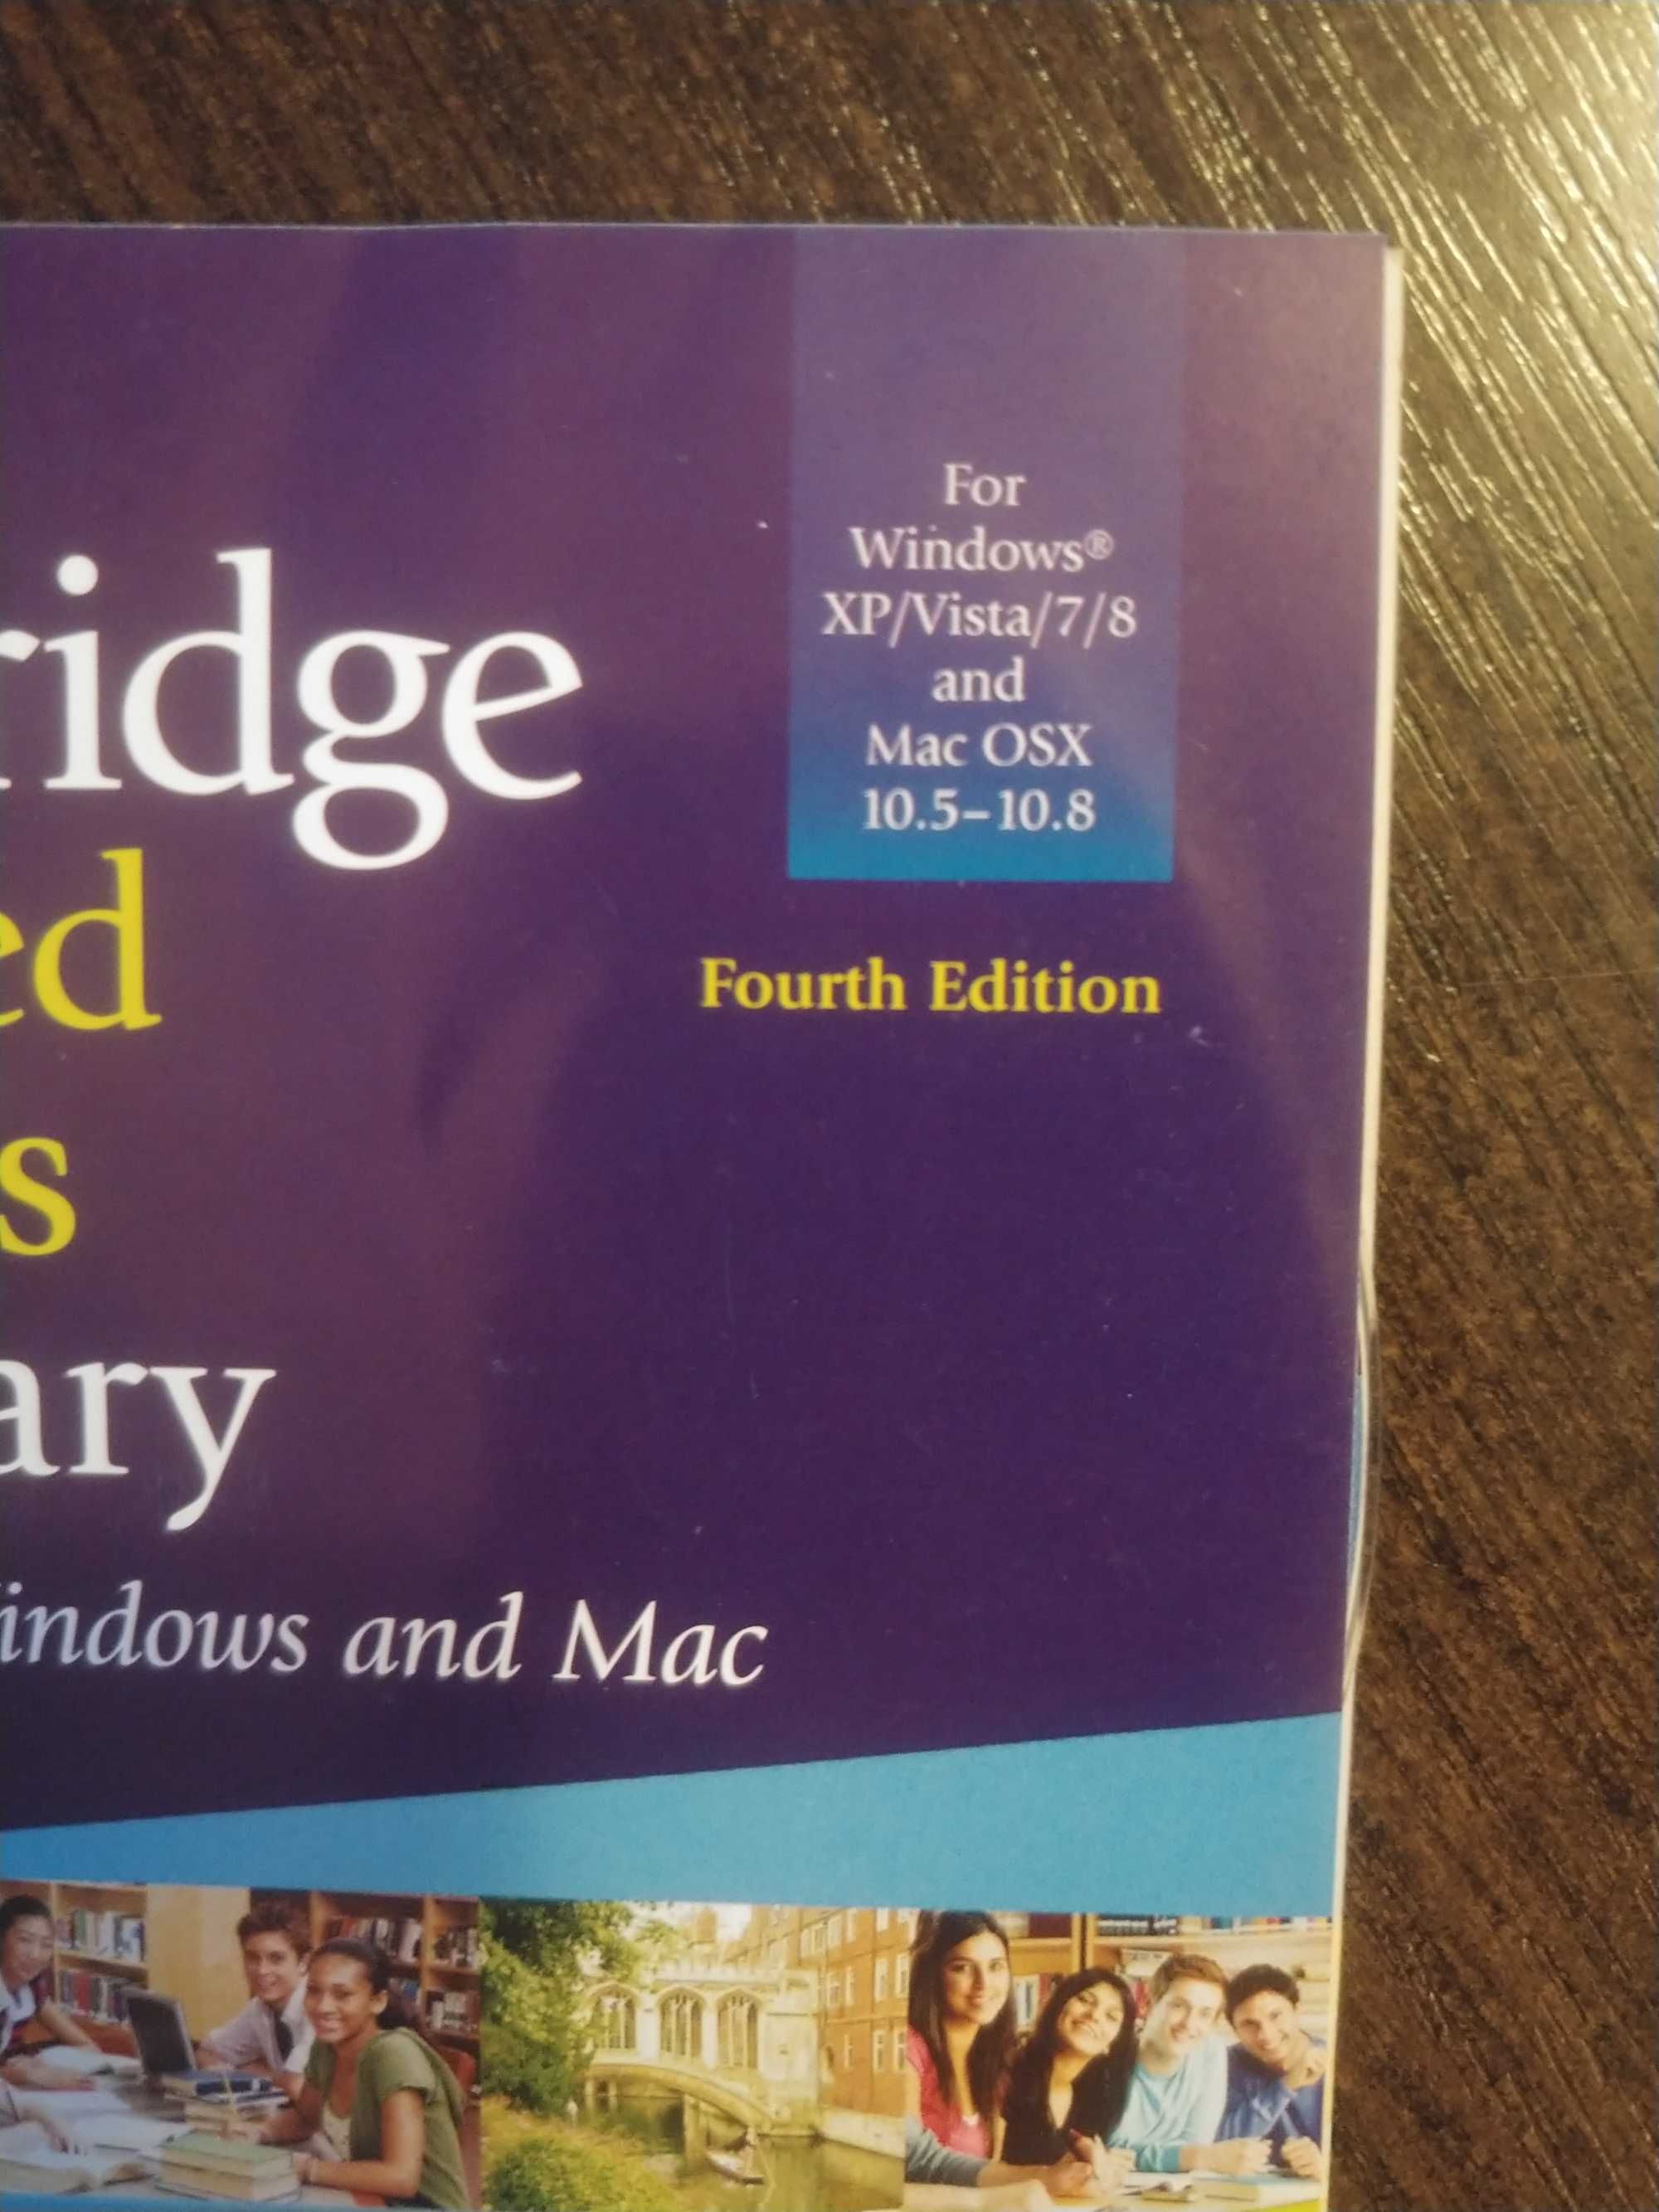 Słownik Cambridge Dictionary Advanced Fourth Edition na płycie